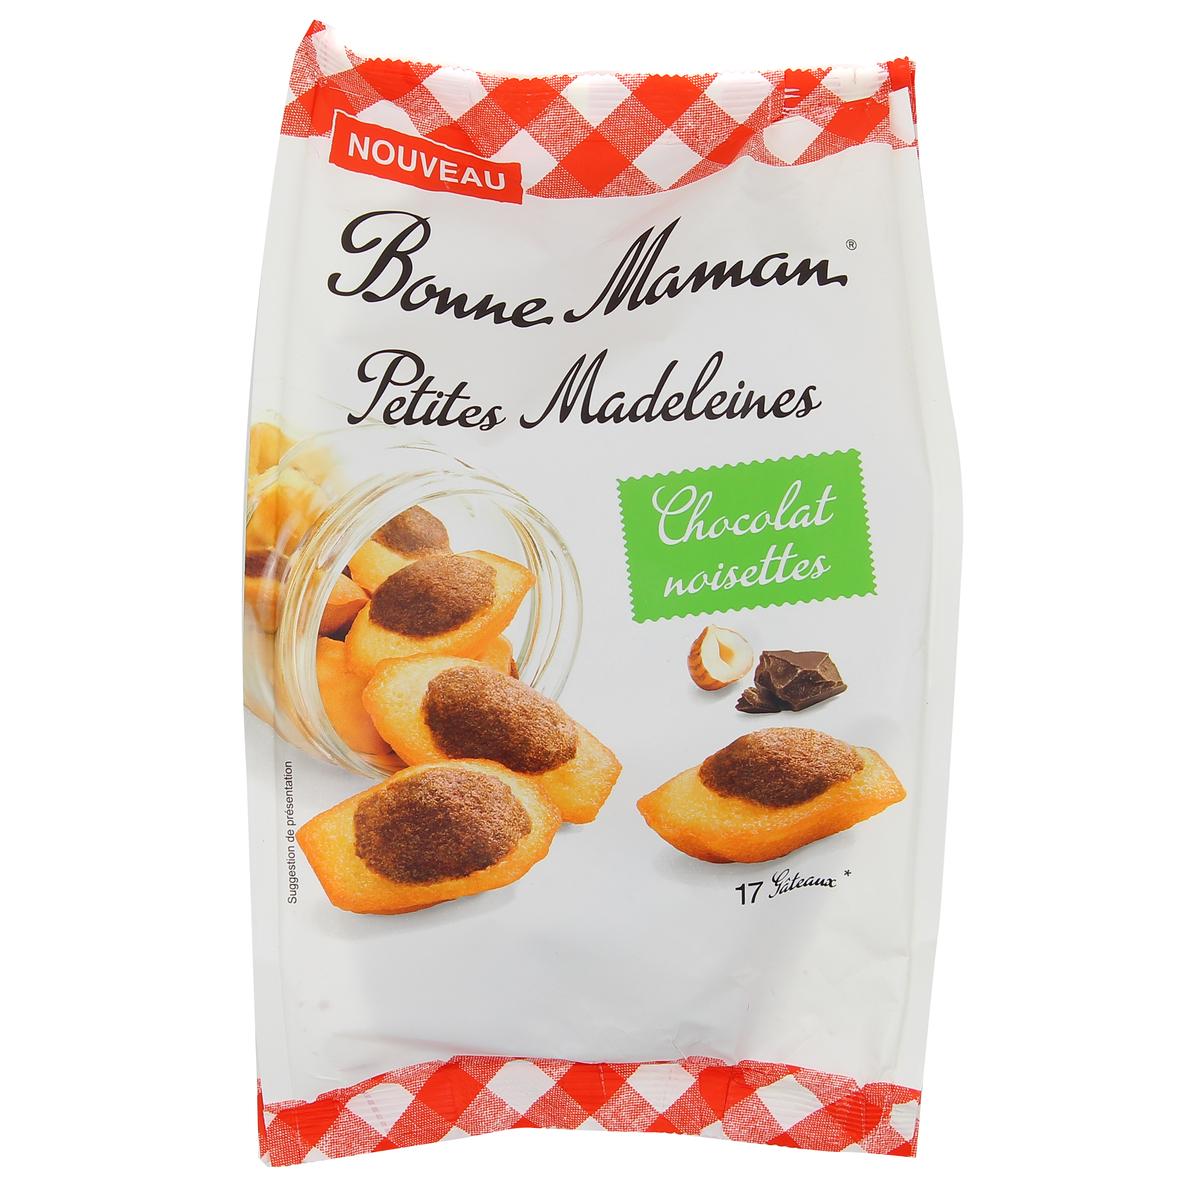 Achat Promotion Bonne Maman Petites madeleines chocolat noisettes x17